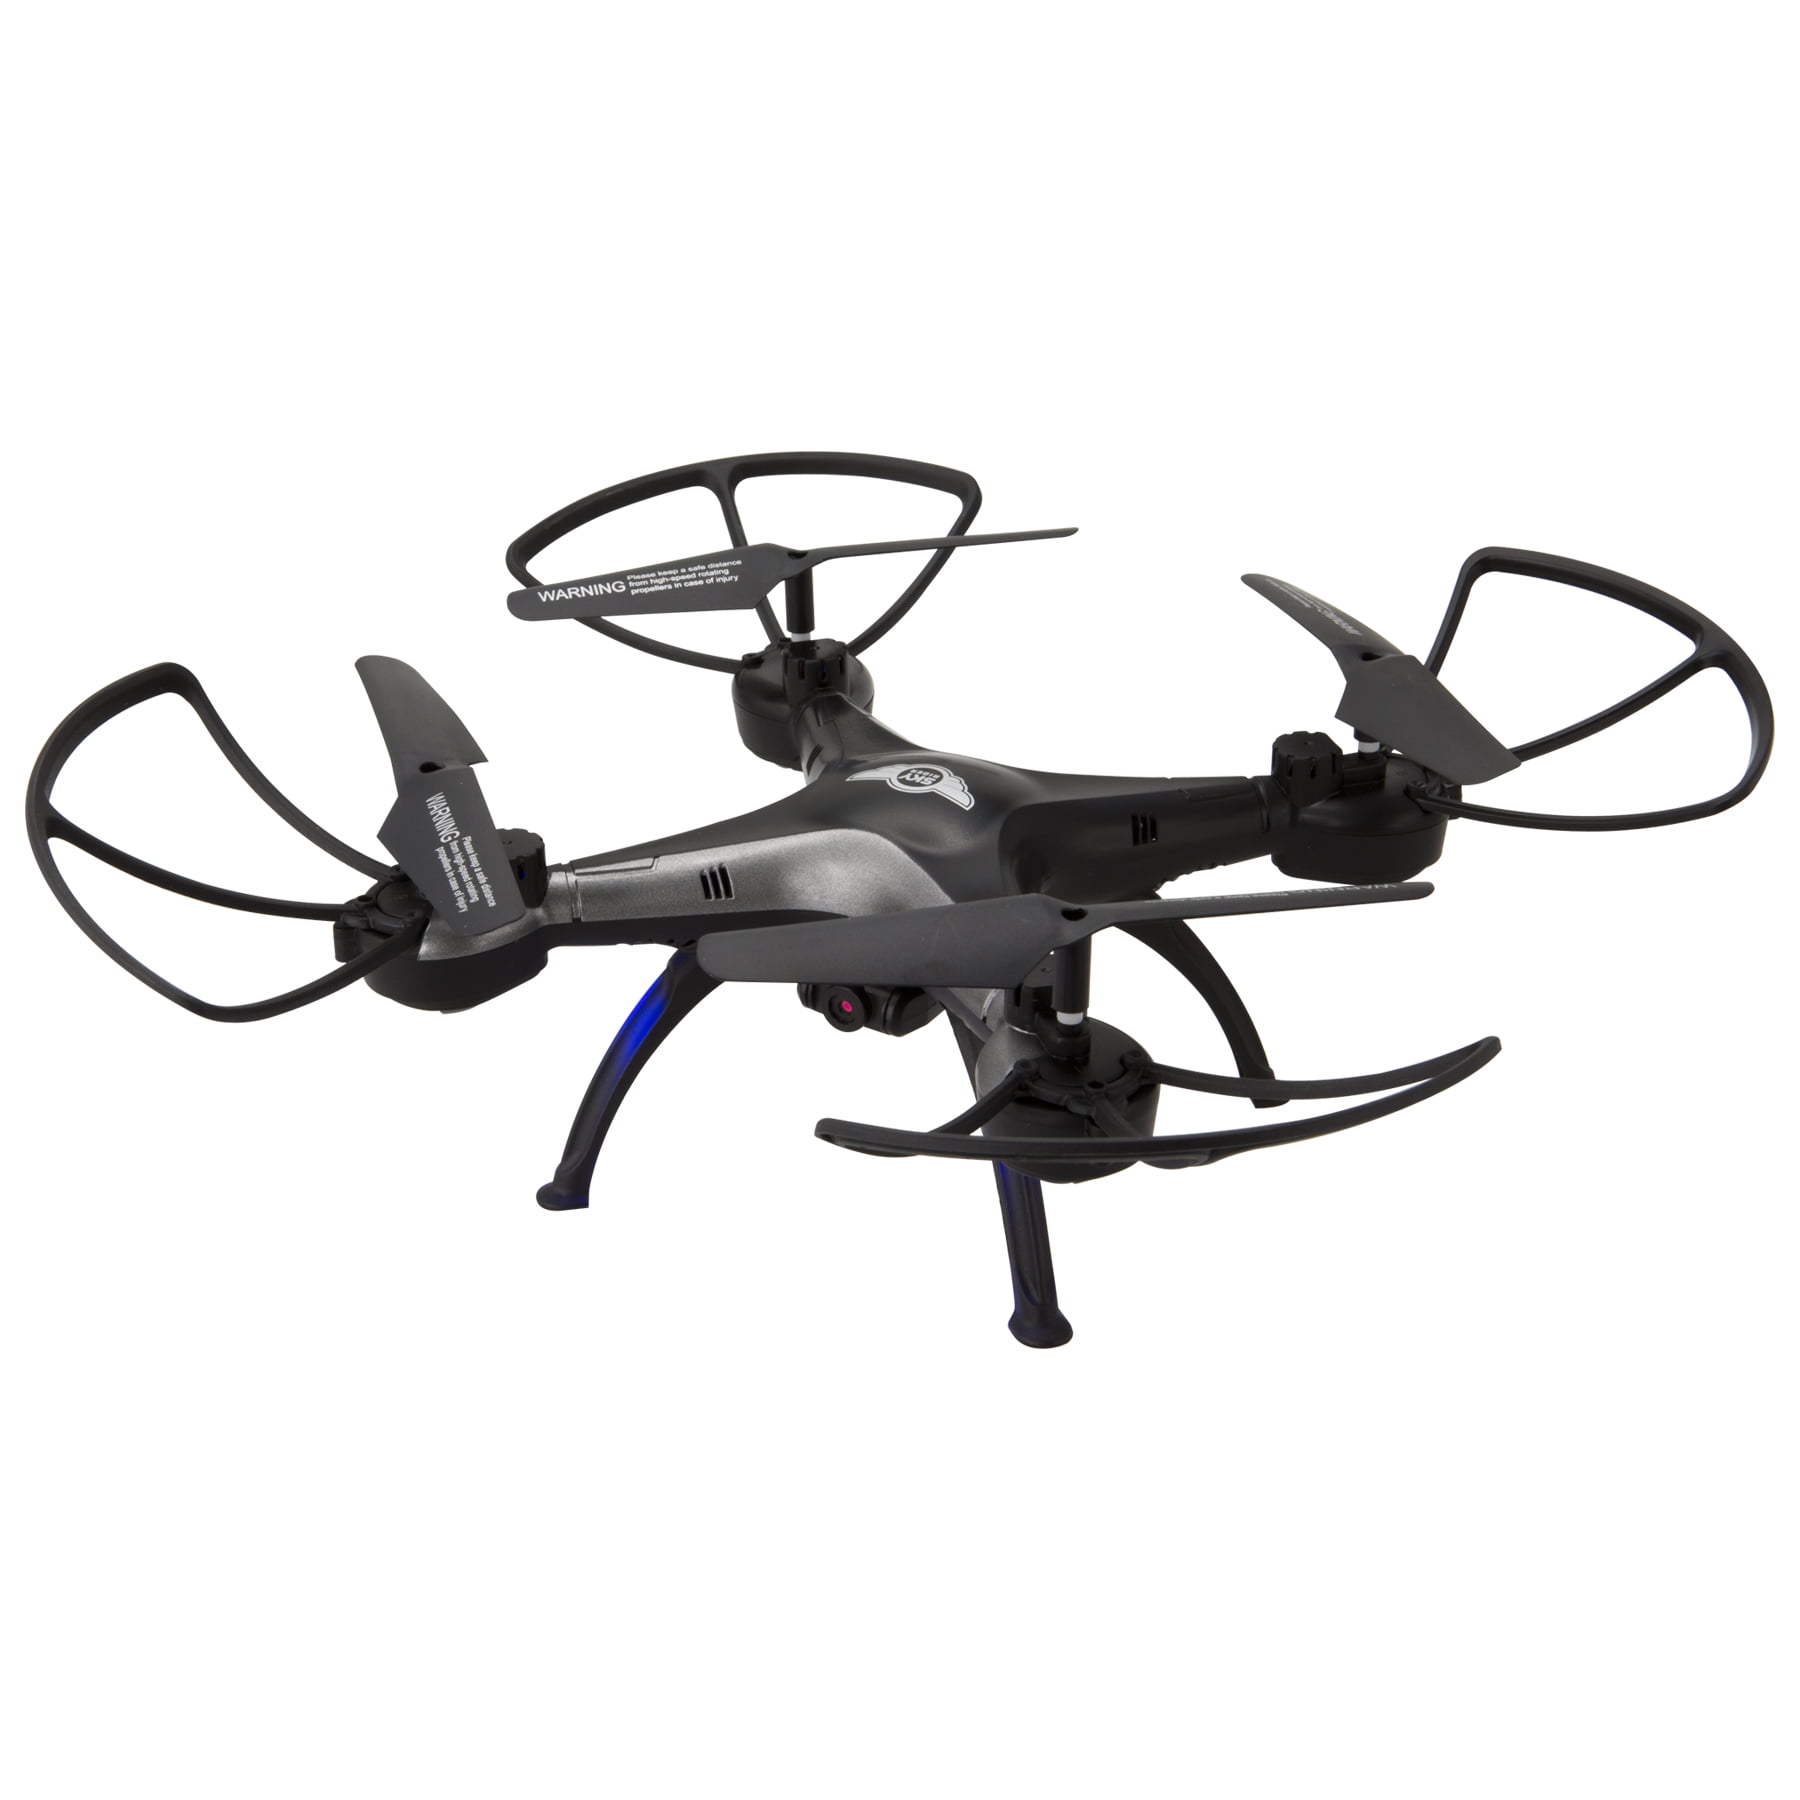 Sky Rider Thunderbird 2 QuadCoptor Drone With Wi-fi Camera Drw330 Black for sale online 